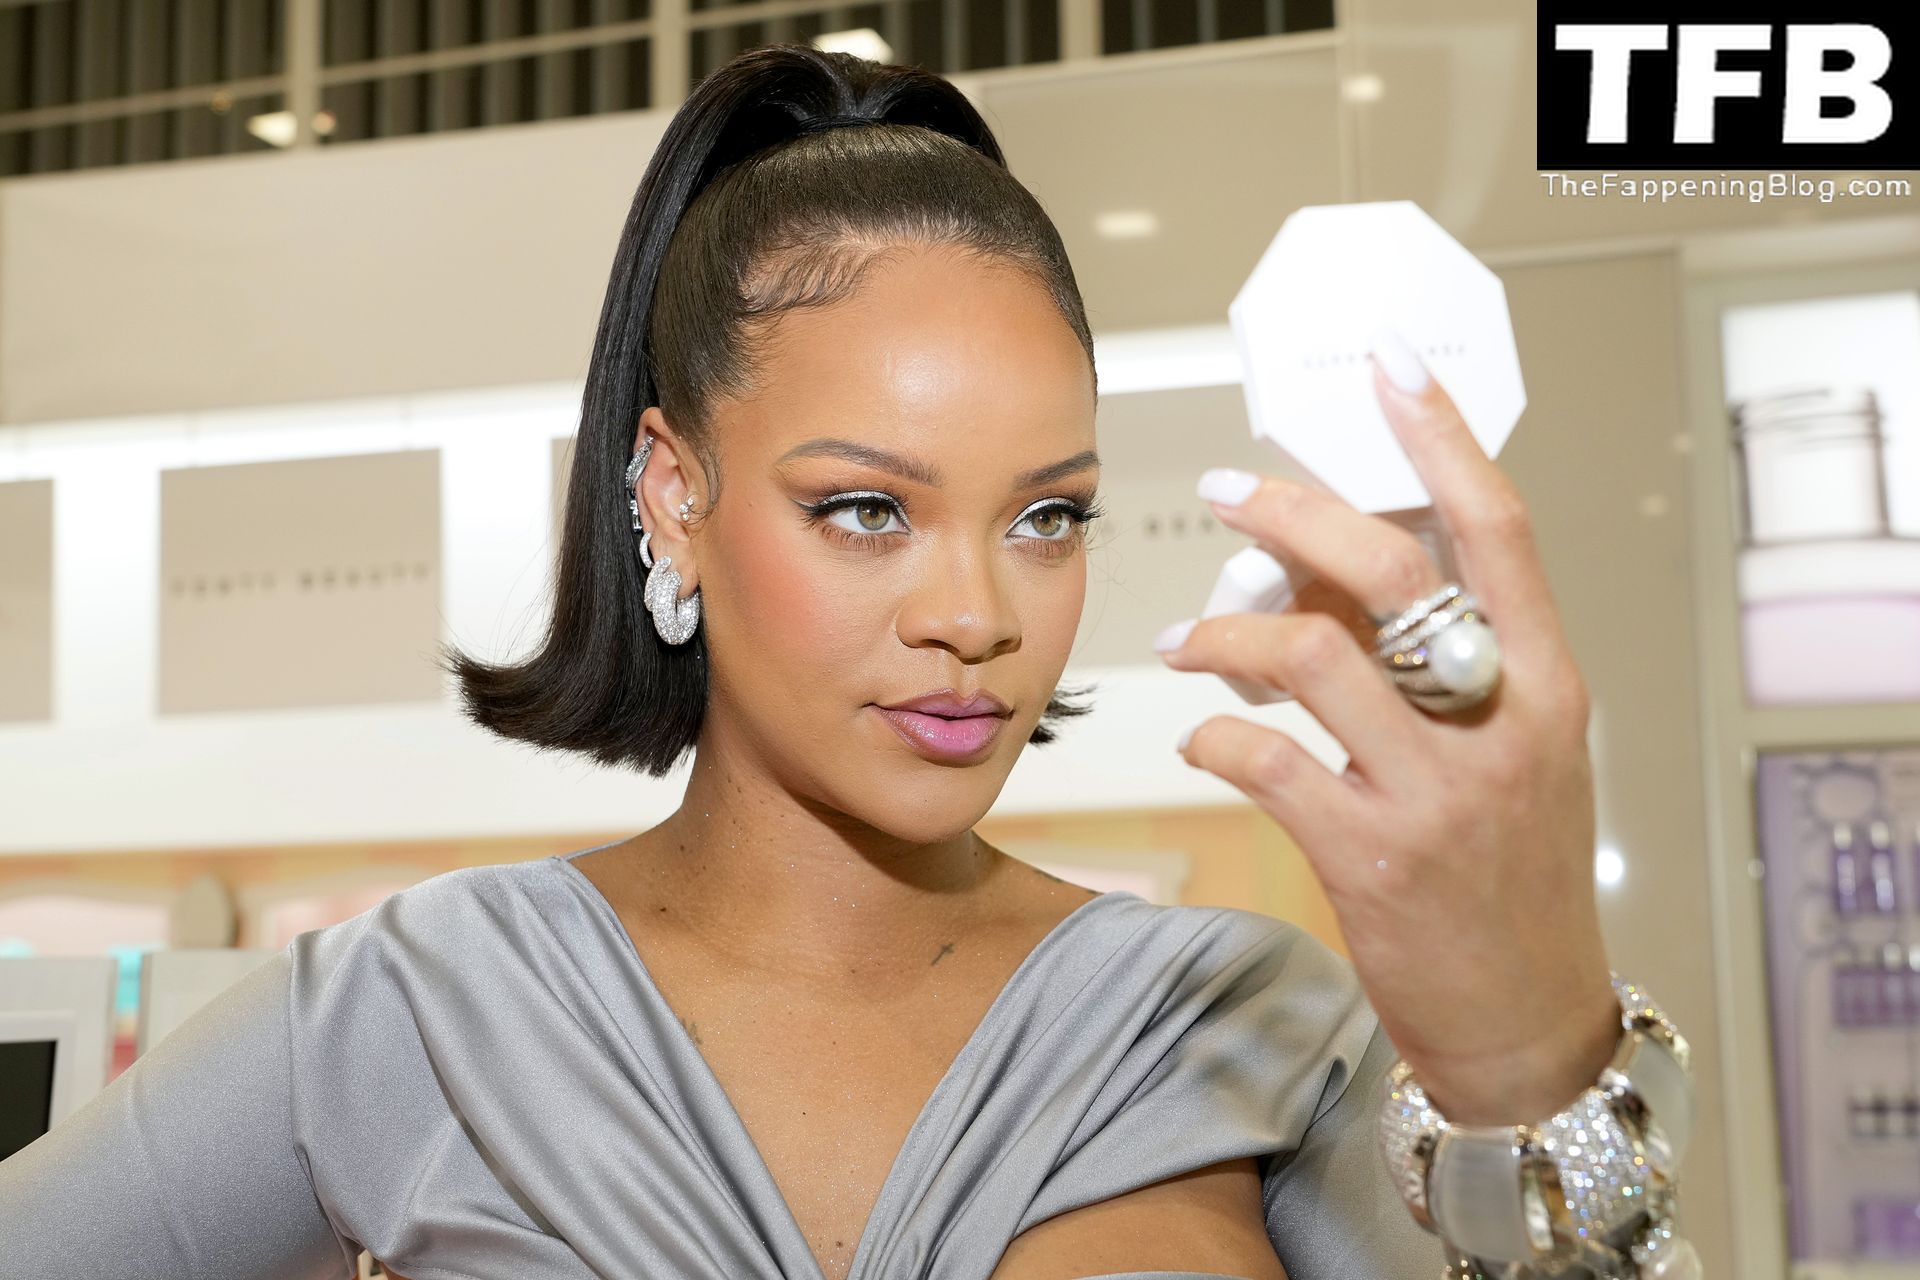 Rihanna-Sexy-The-Fappening-Blog-26-4.jpg